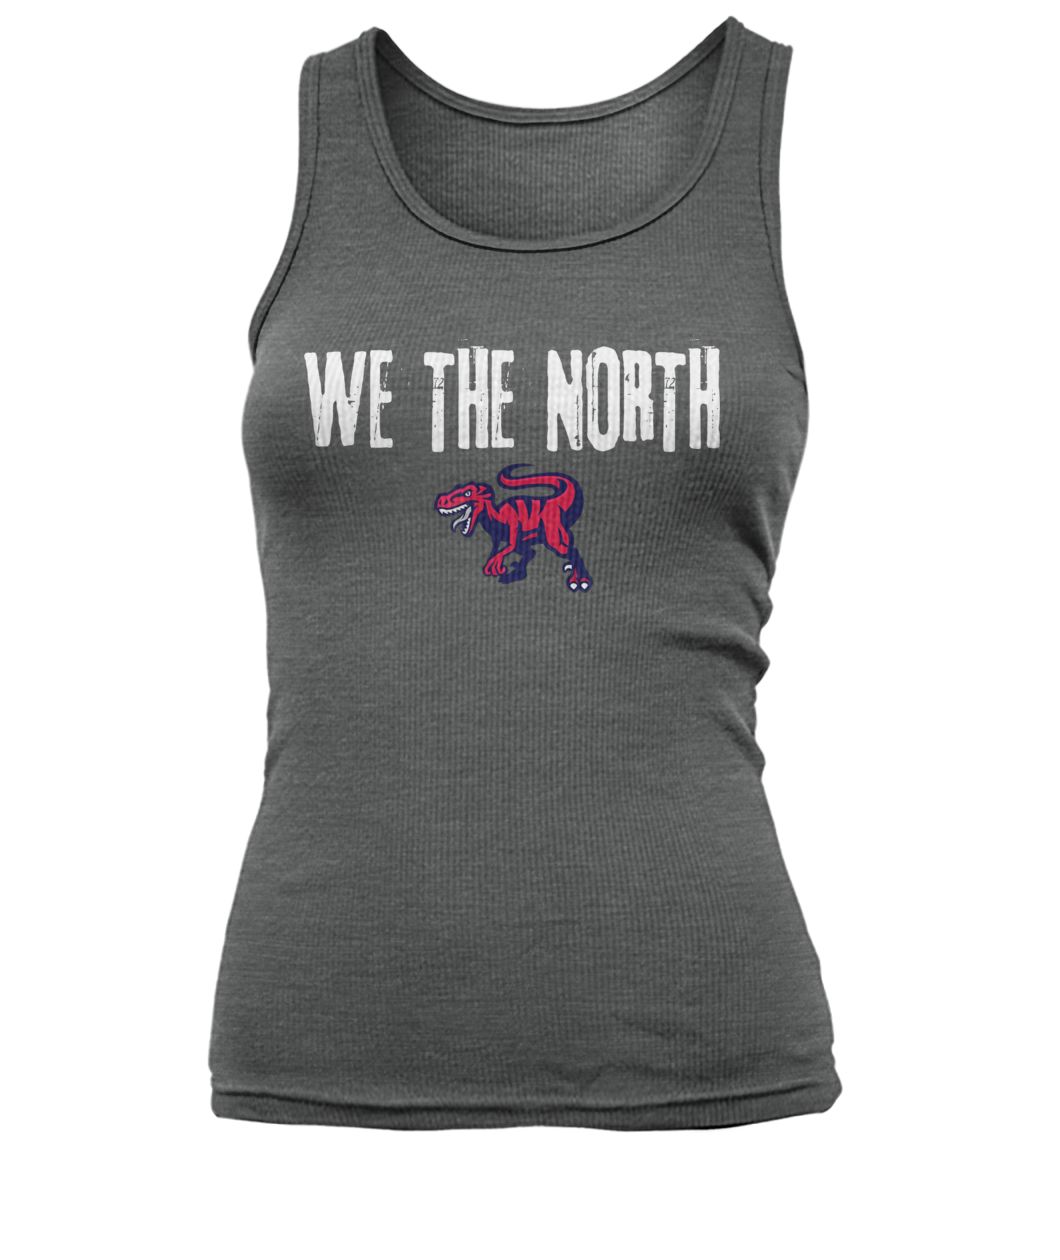 We the north velociraptor basketball women's tank top